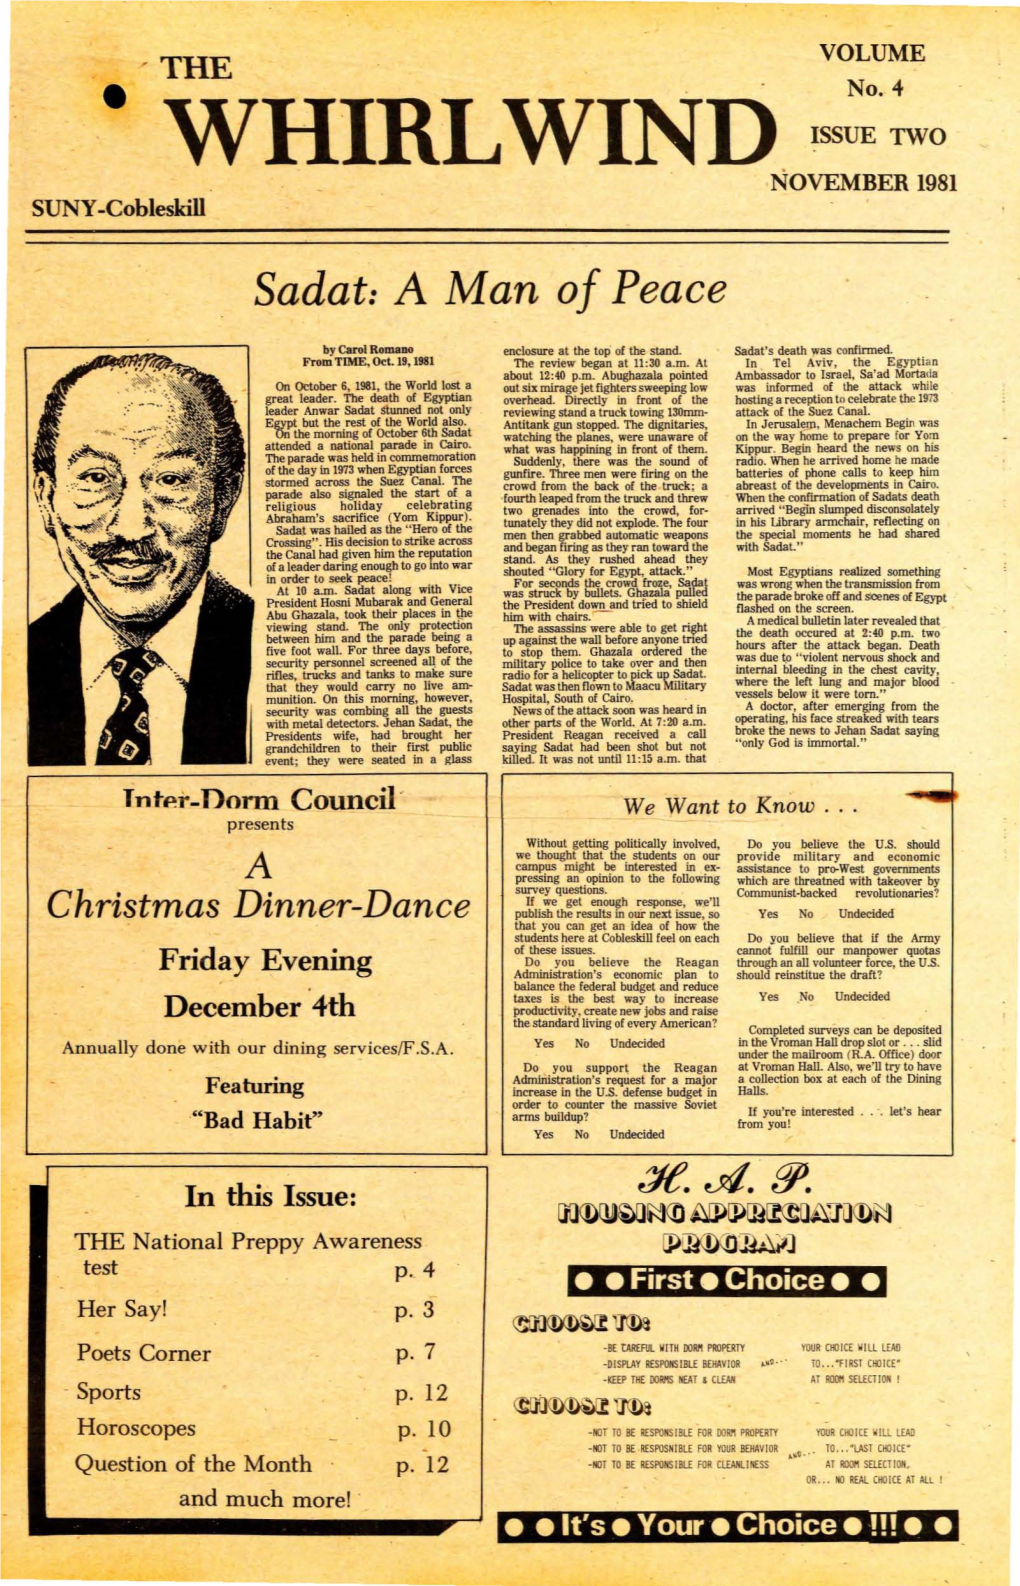 November 1981, Vol. 4, Issue 2